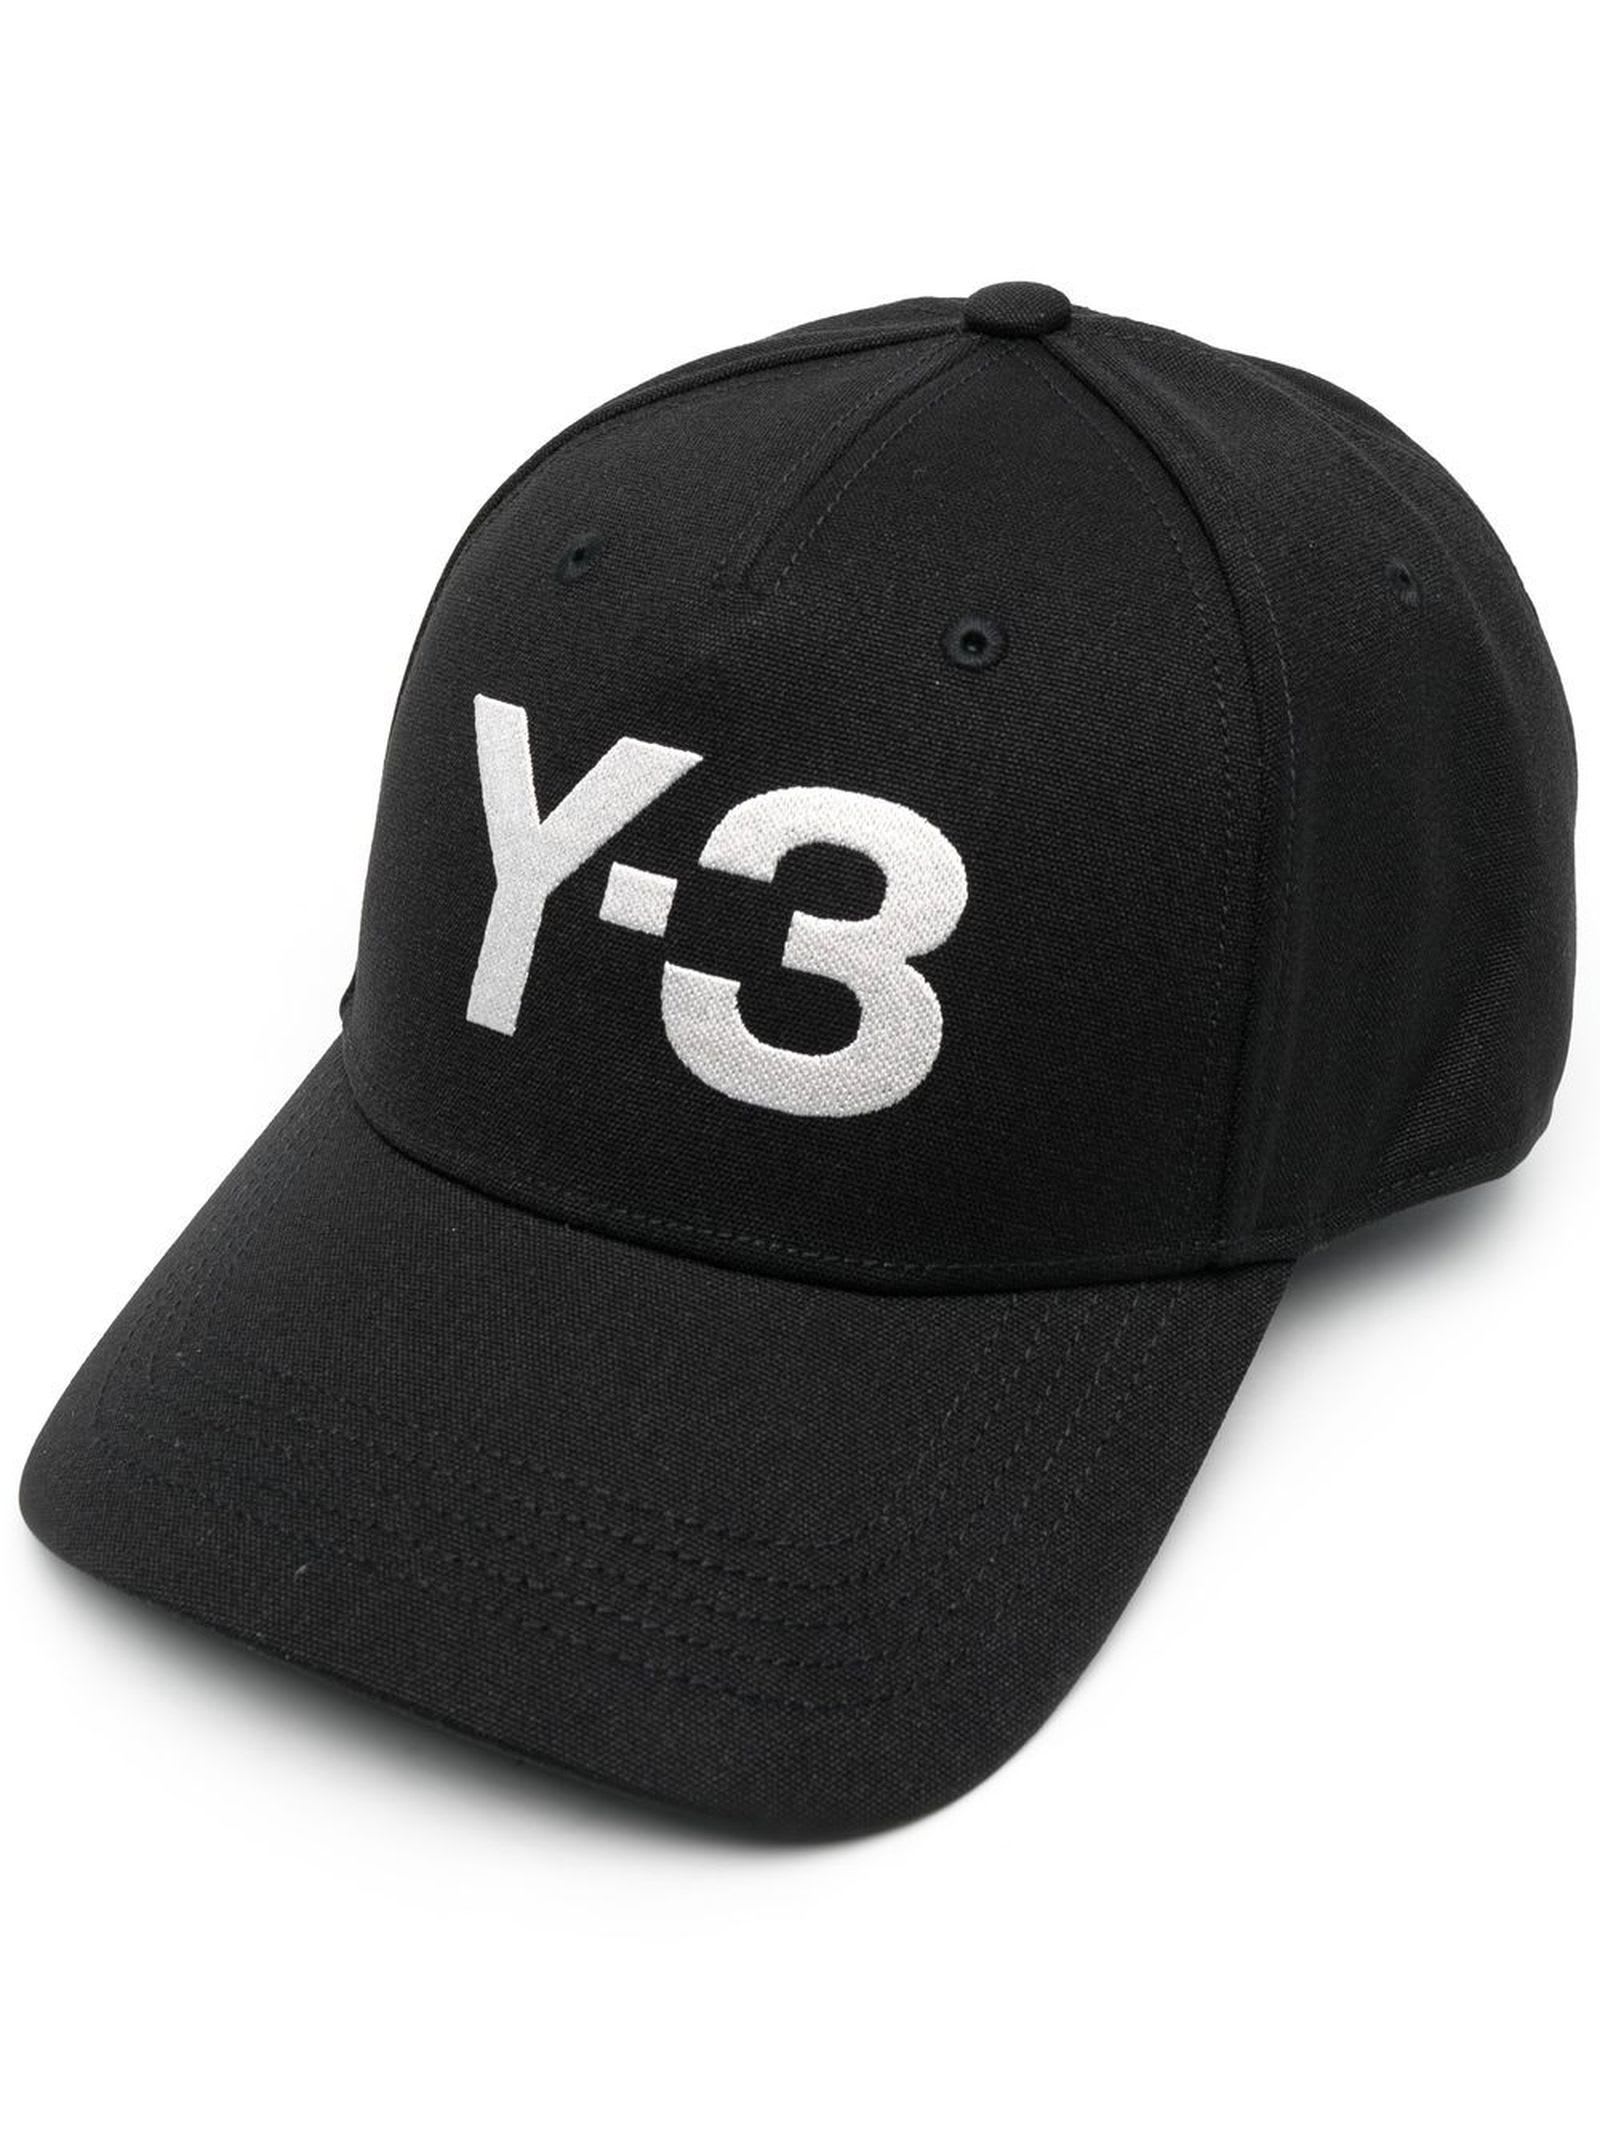 Y-3 JET BLACK COTTON BASEBALL CAP